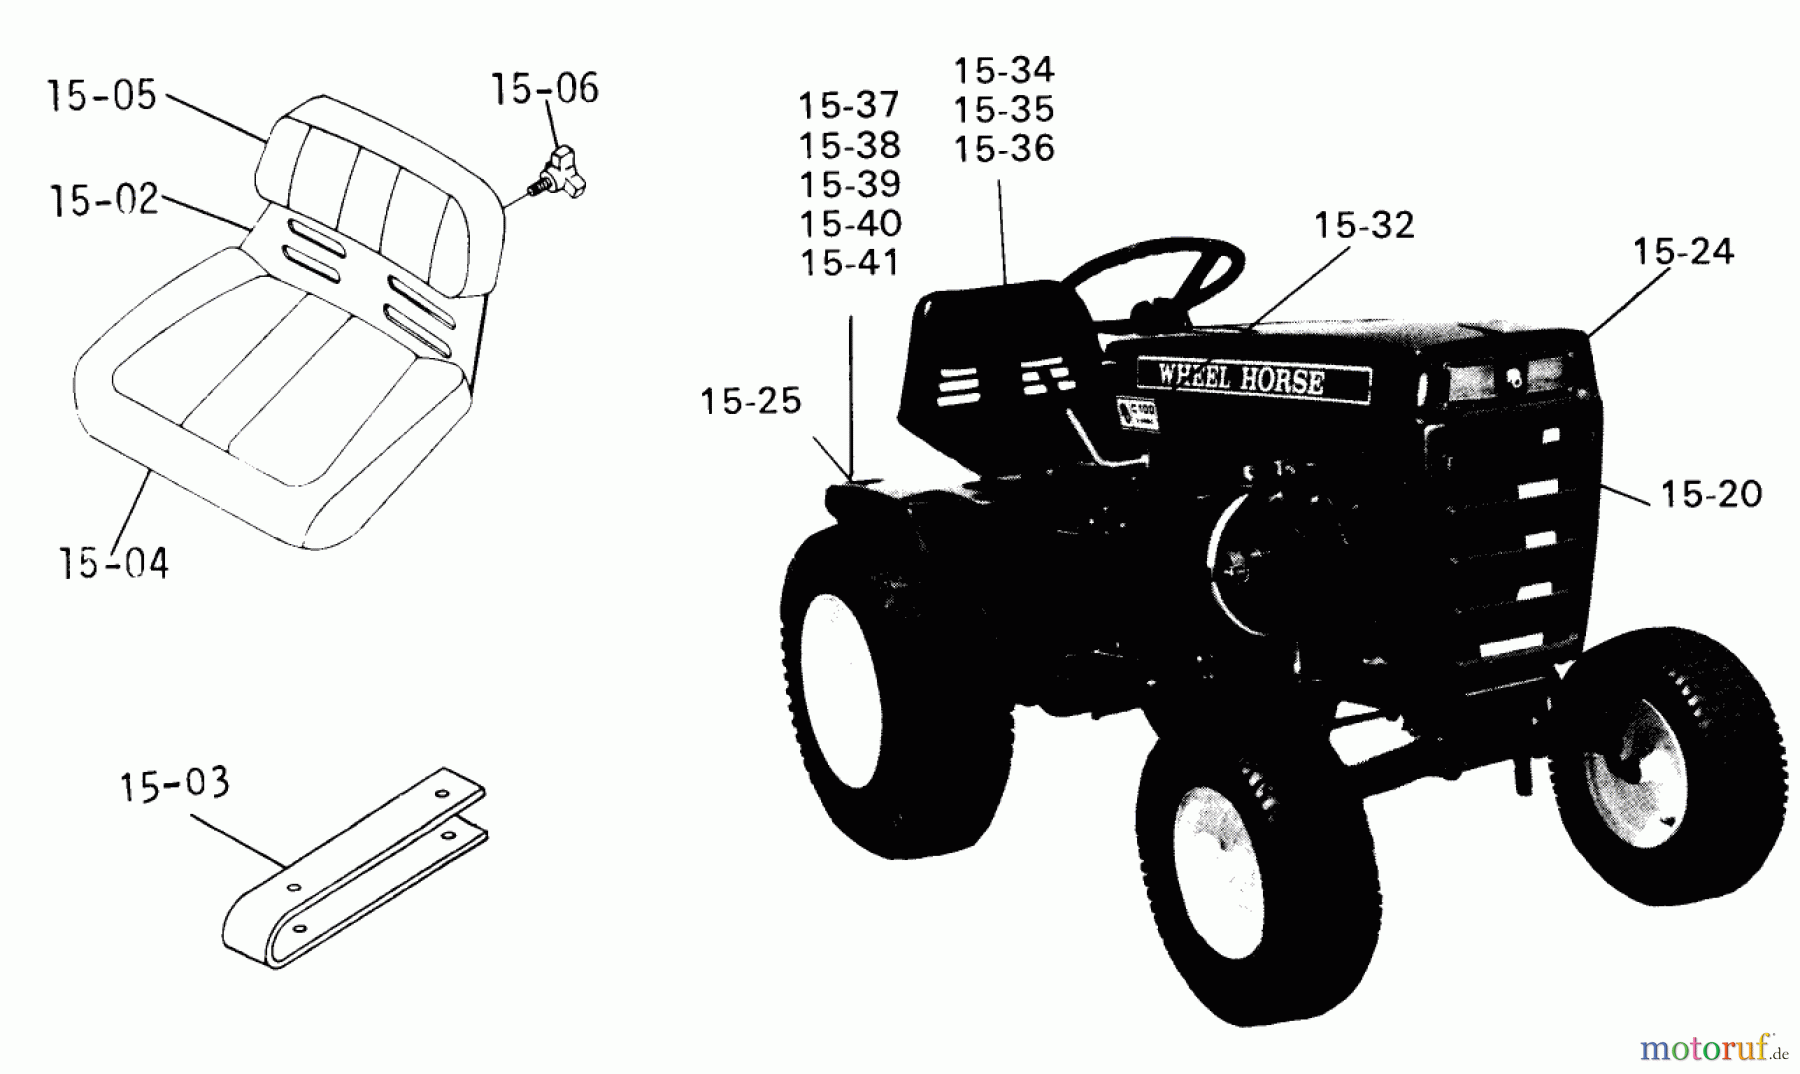  Toro Neu Mowers, Lawn & Garden Tractor Seite 1 1-0354 (C-120) - Toro C-120 8-Speed Tractor, 1974 SEATS, DECALS, MISC. TRIM